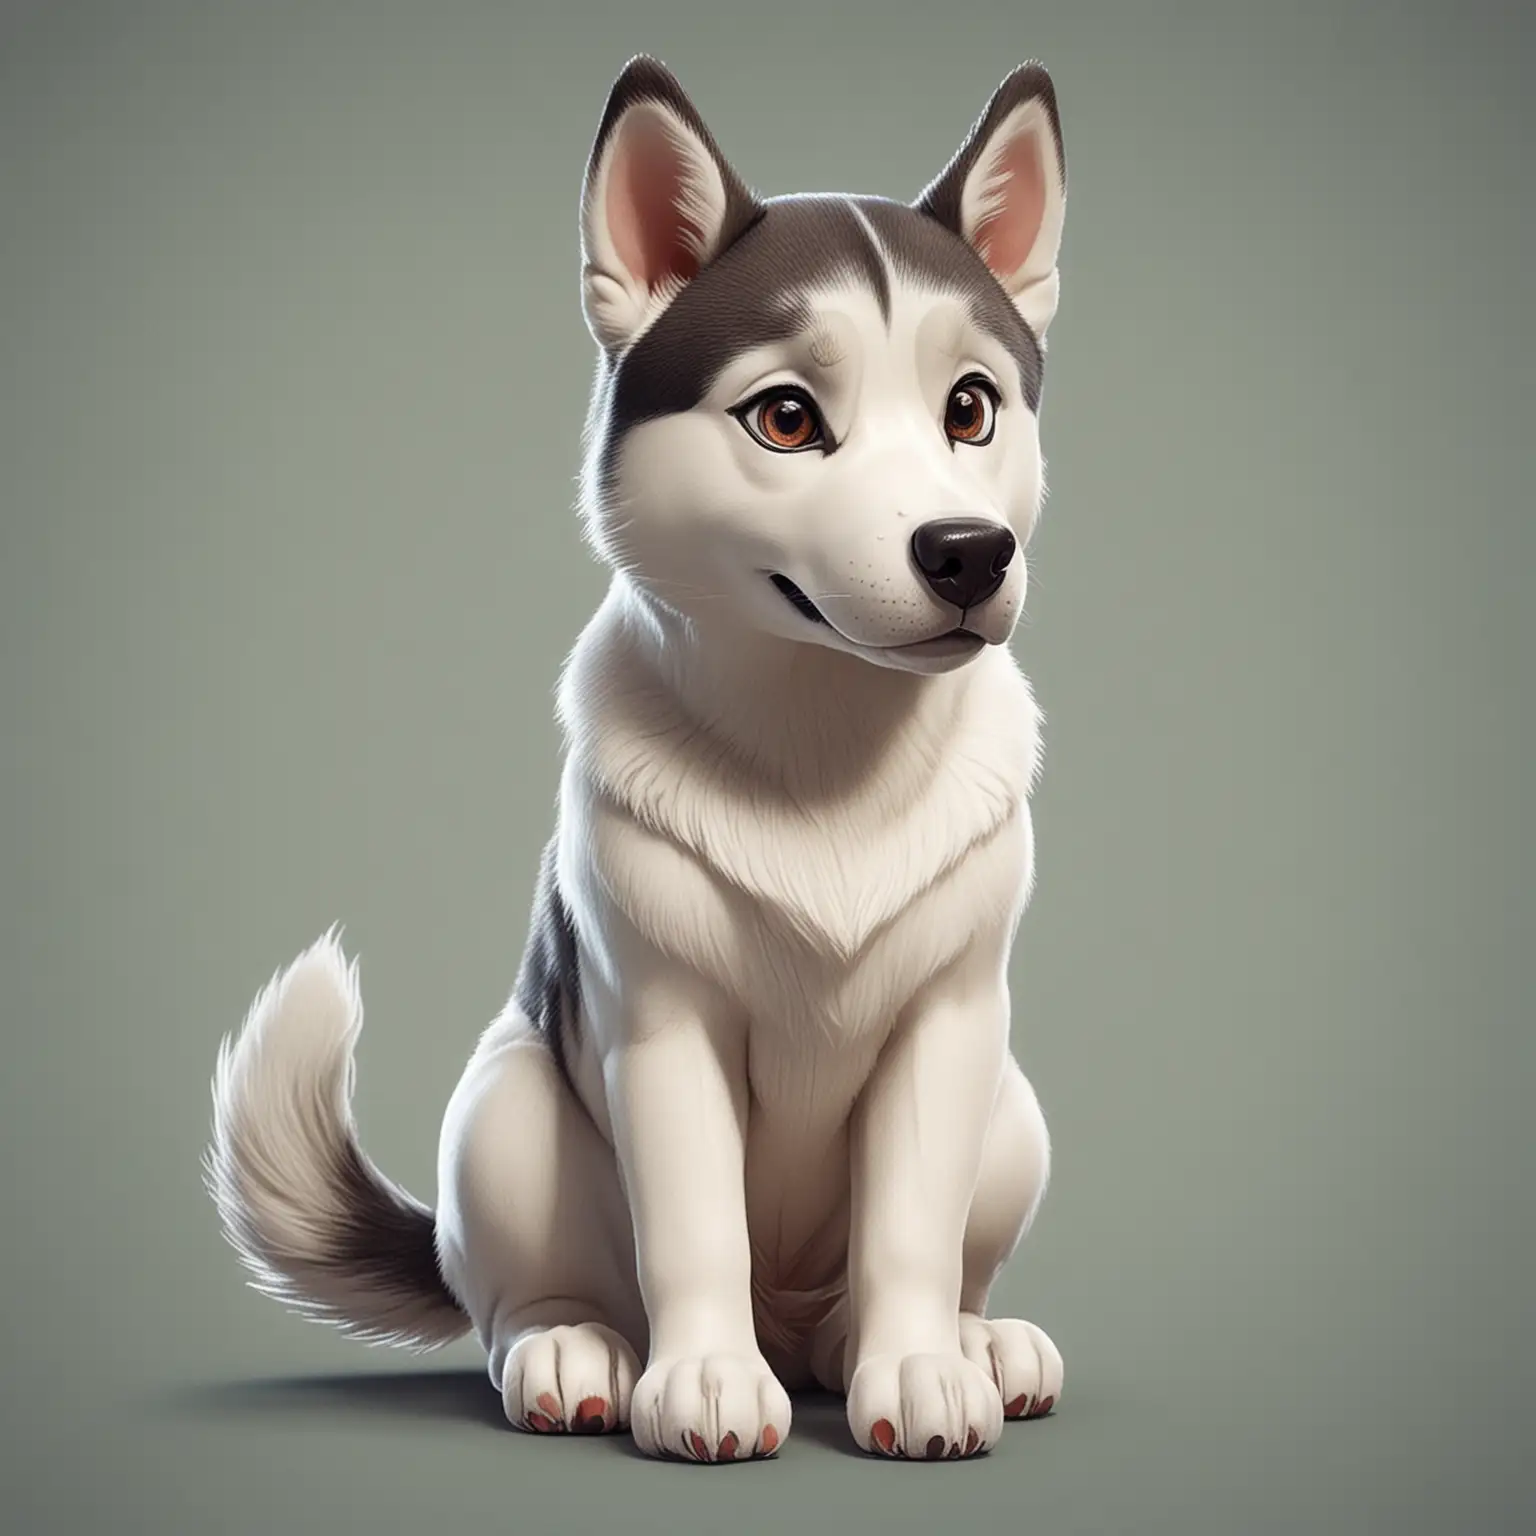 Cartoon-Siberian-Husky-Dog-Sitting-Pose-Illustration